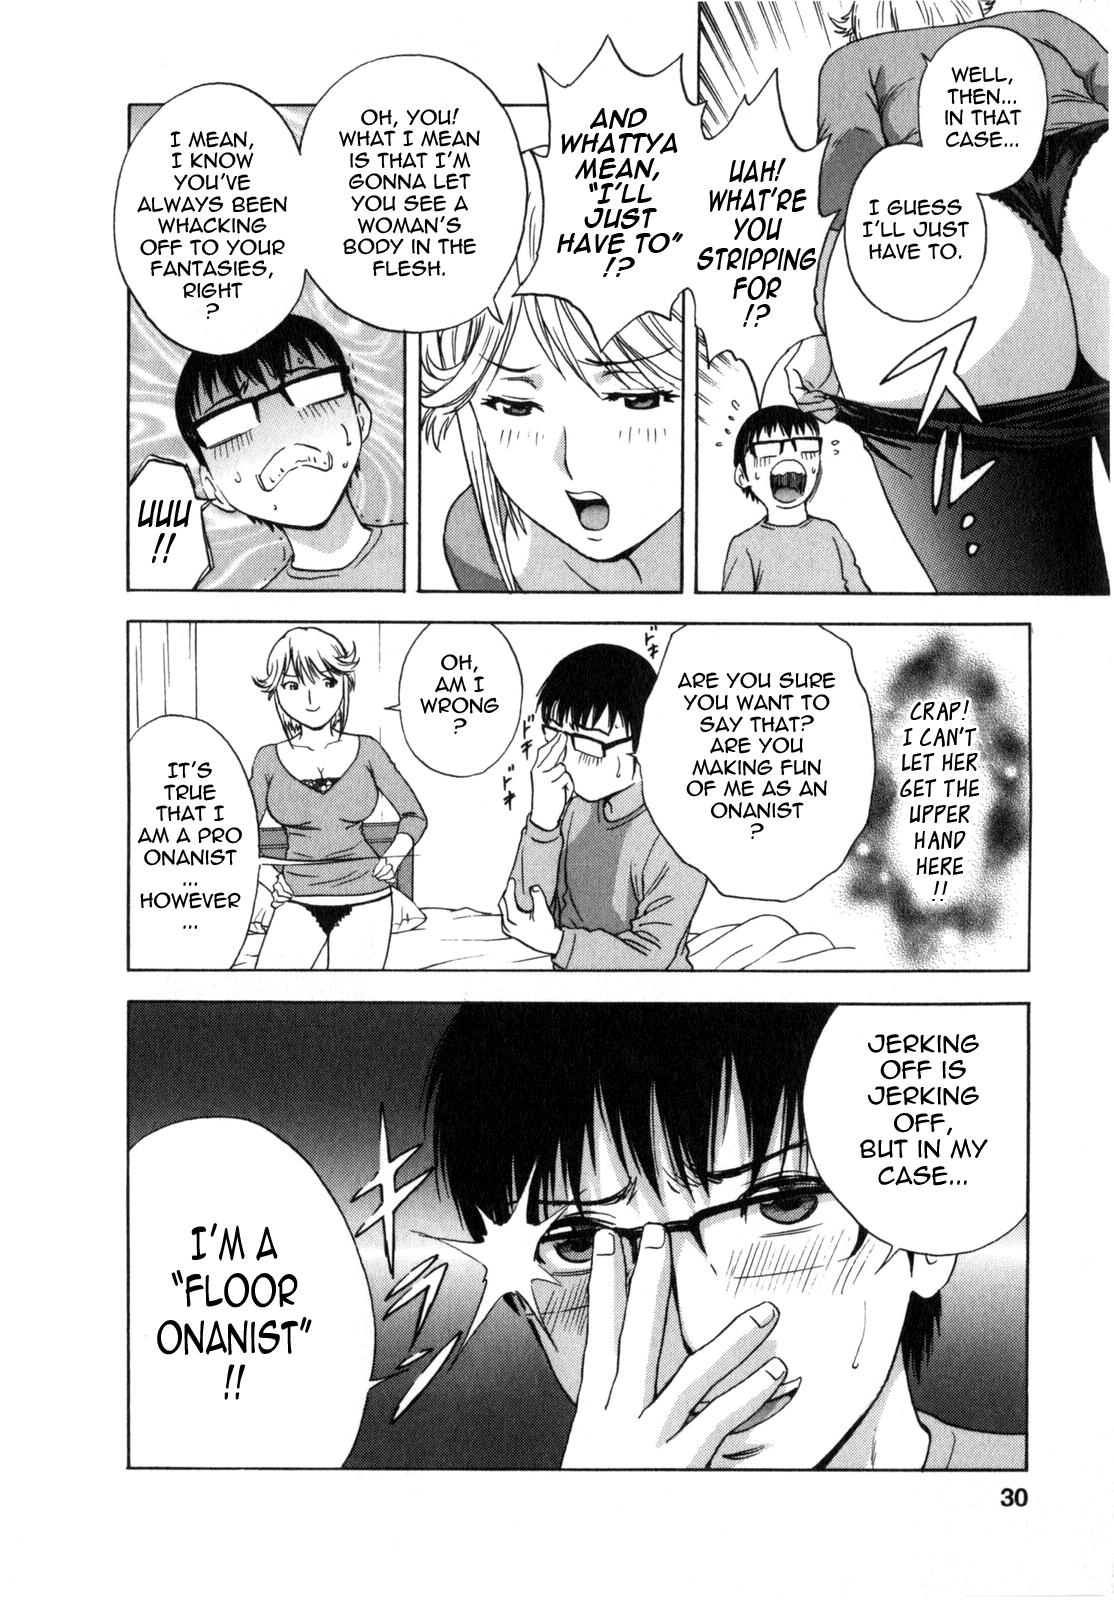 [Hidemaru] Life with Married Women Just Like a Manga 1 - Ch. 1-7 [English] {Tadanohito} 31